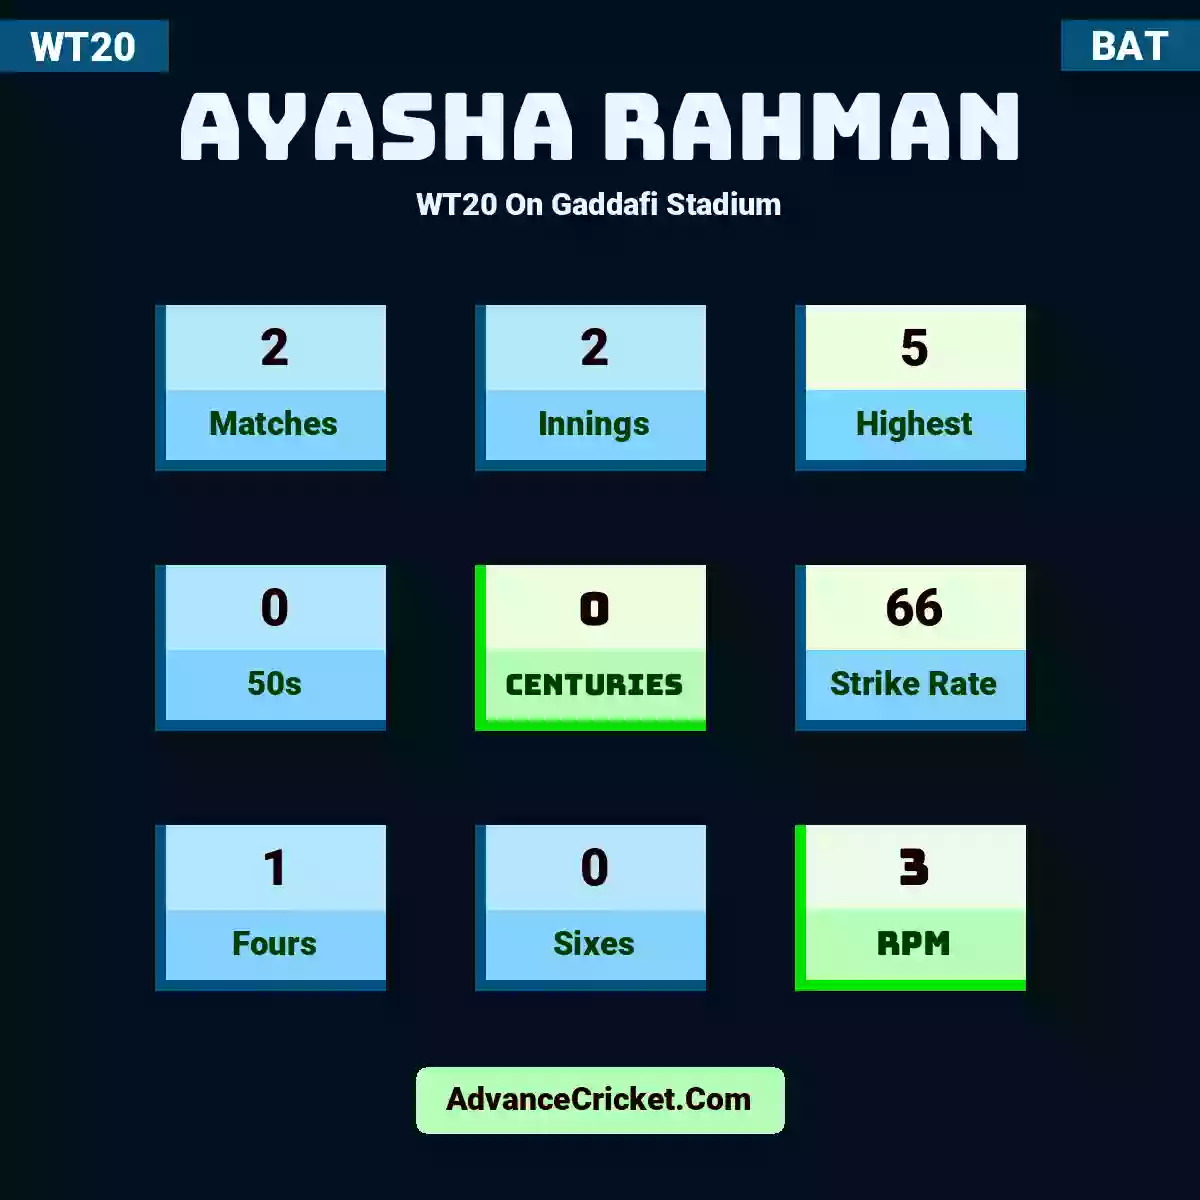 Ayasha Rahman WT20  On Gaddafi Stadium, Ayasha Rahman played 2 matches, scored 5 runs as highest, 0 half-centuries, and 0 centuries, with a strike rate of 66. A.Rahman hit 1 fours and 0 sixes, with an RPM of 3.